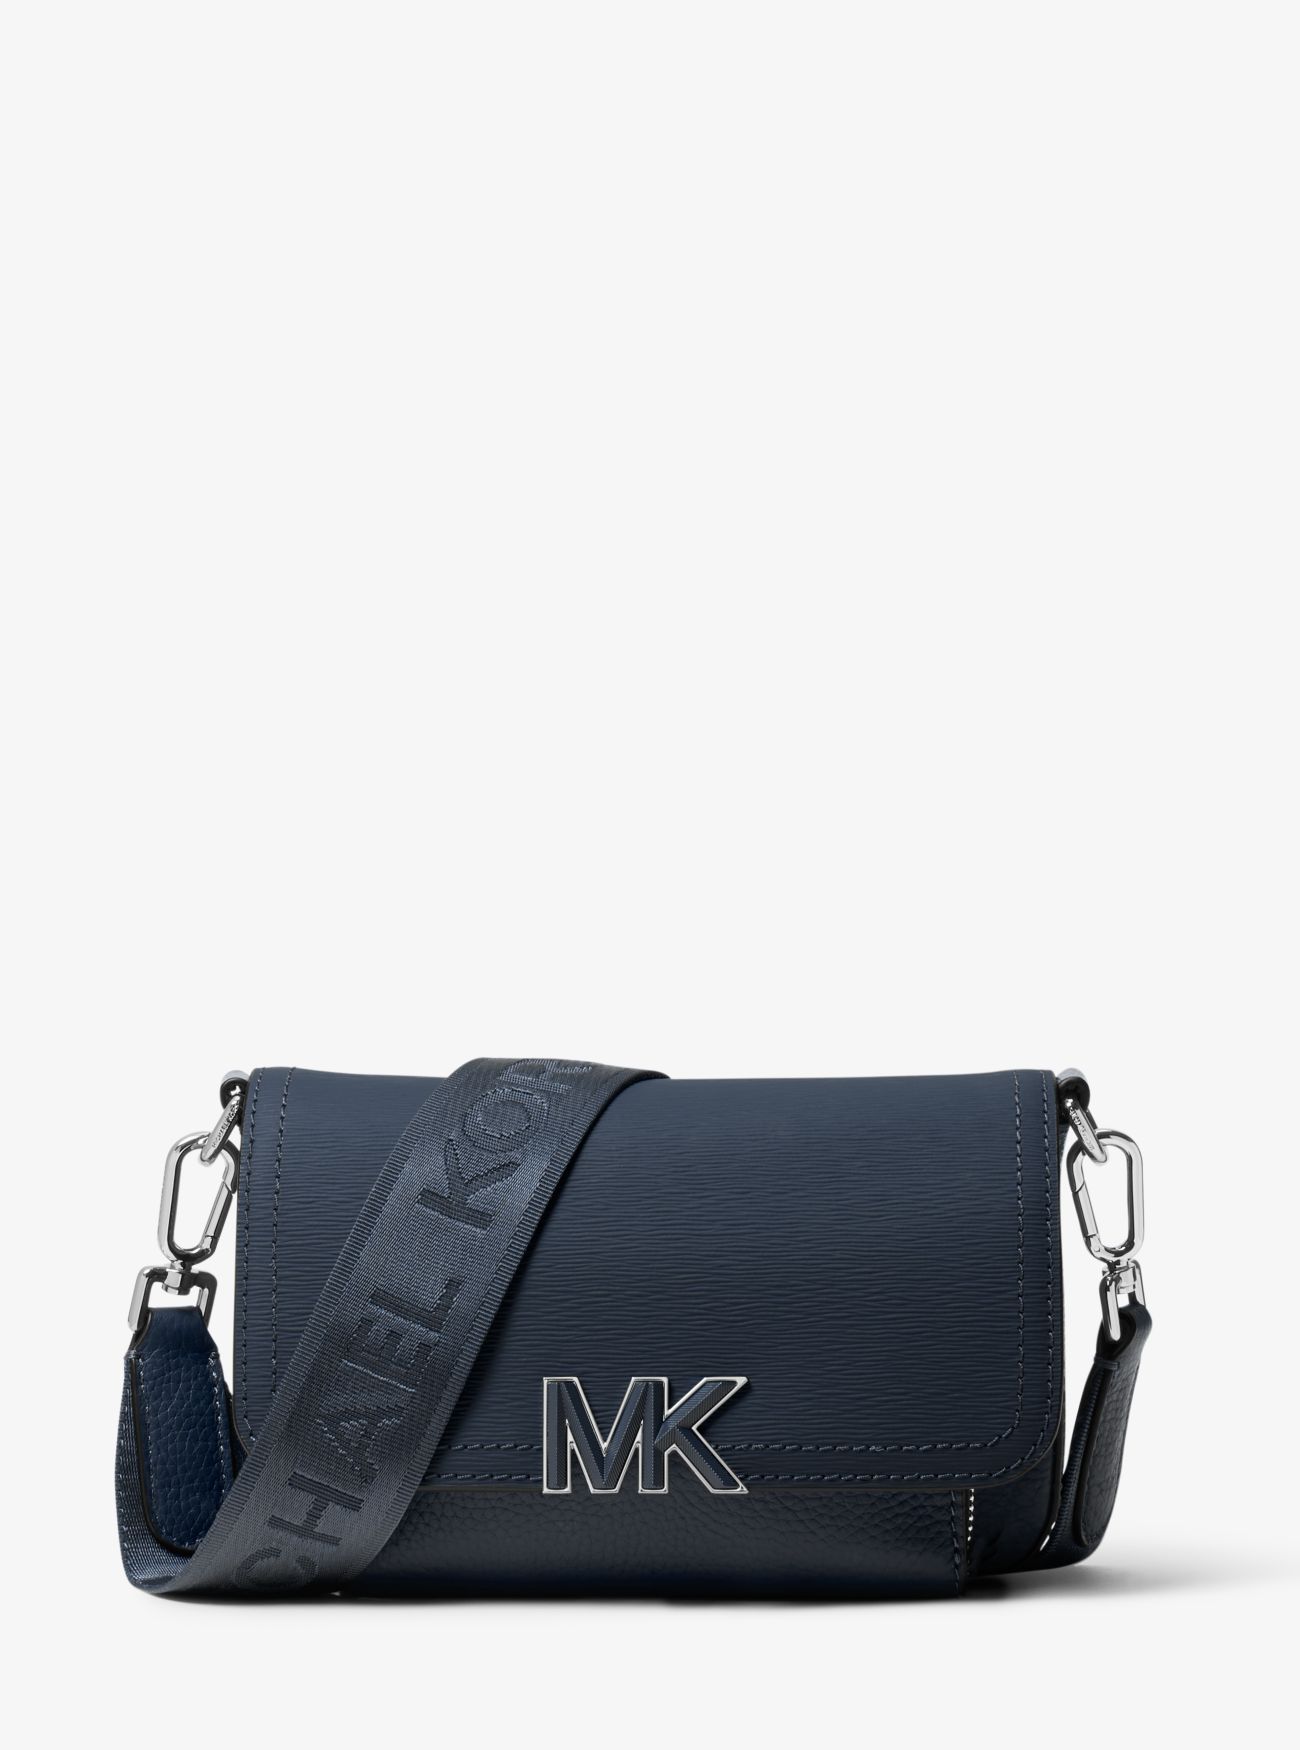 MK Hudson Textured Leather Crossbody Bag - Blue - Michael Kors